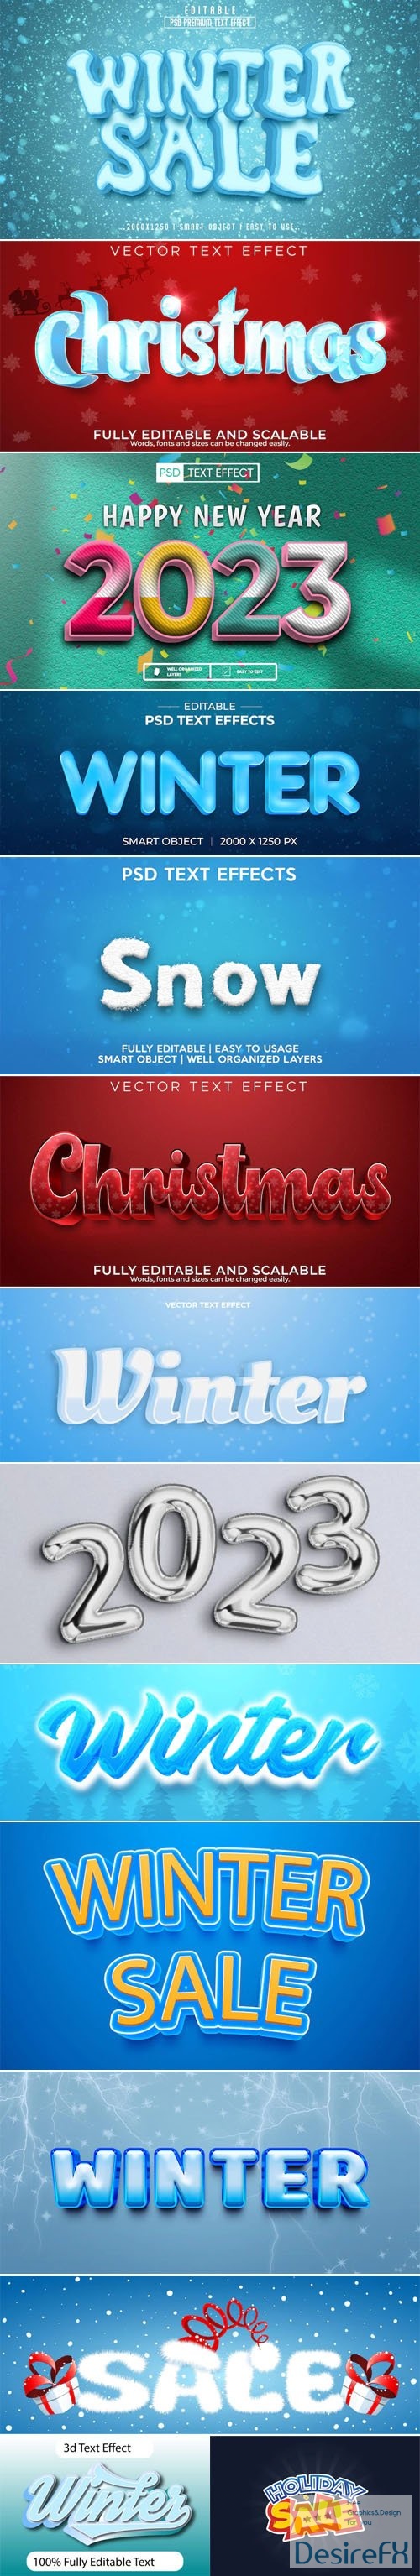 10+ Winter Season & Holidays Text Effects for Photoshop & Illustrator